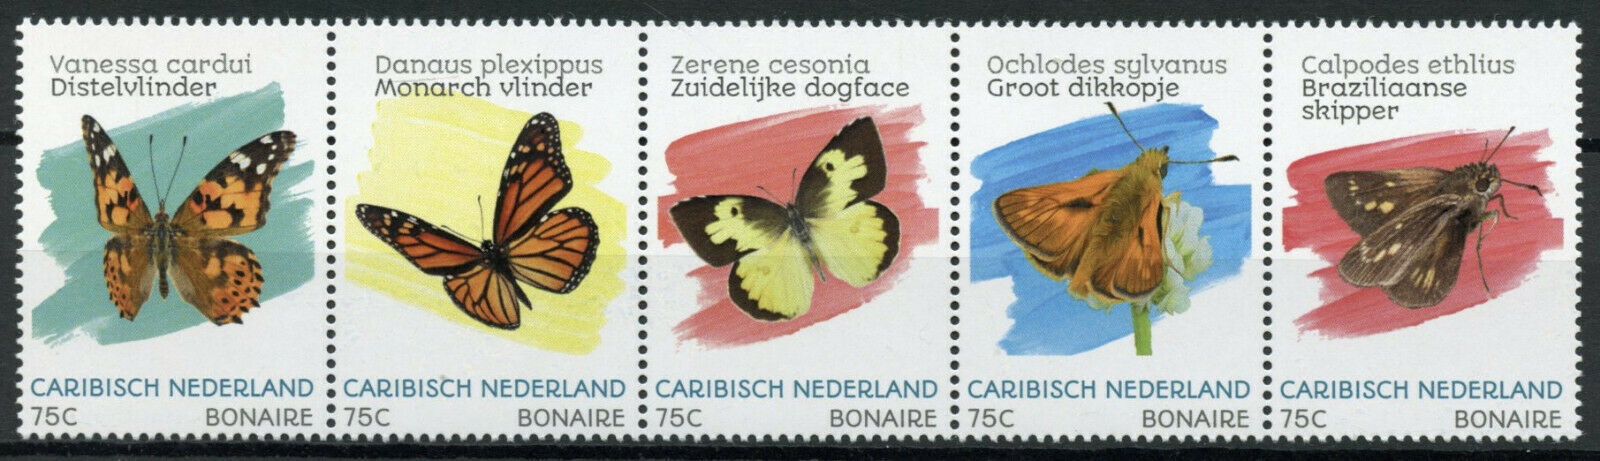 Bonaire Caribbean Netherlands Butterflies Stamps 2020 MNH Butterfly 5v Strip